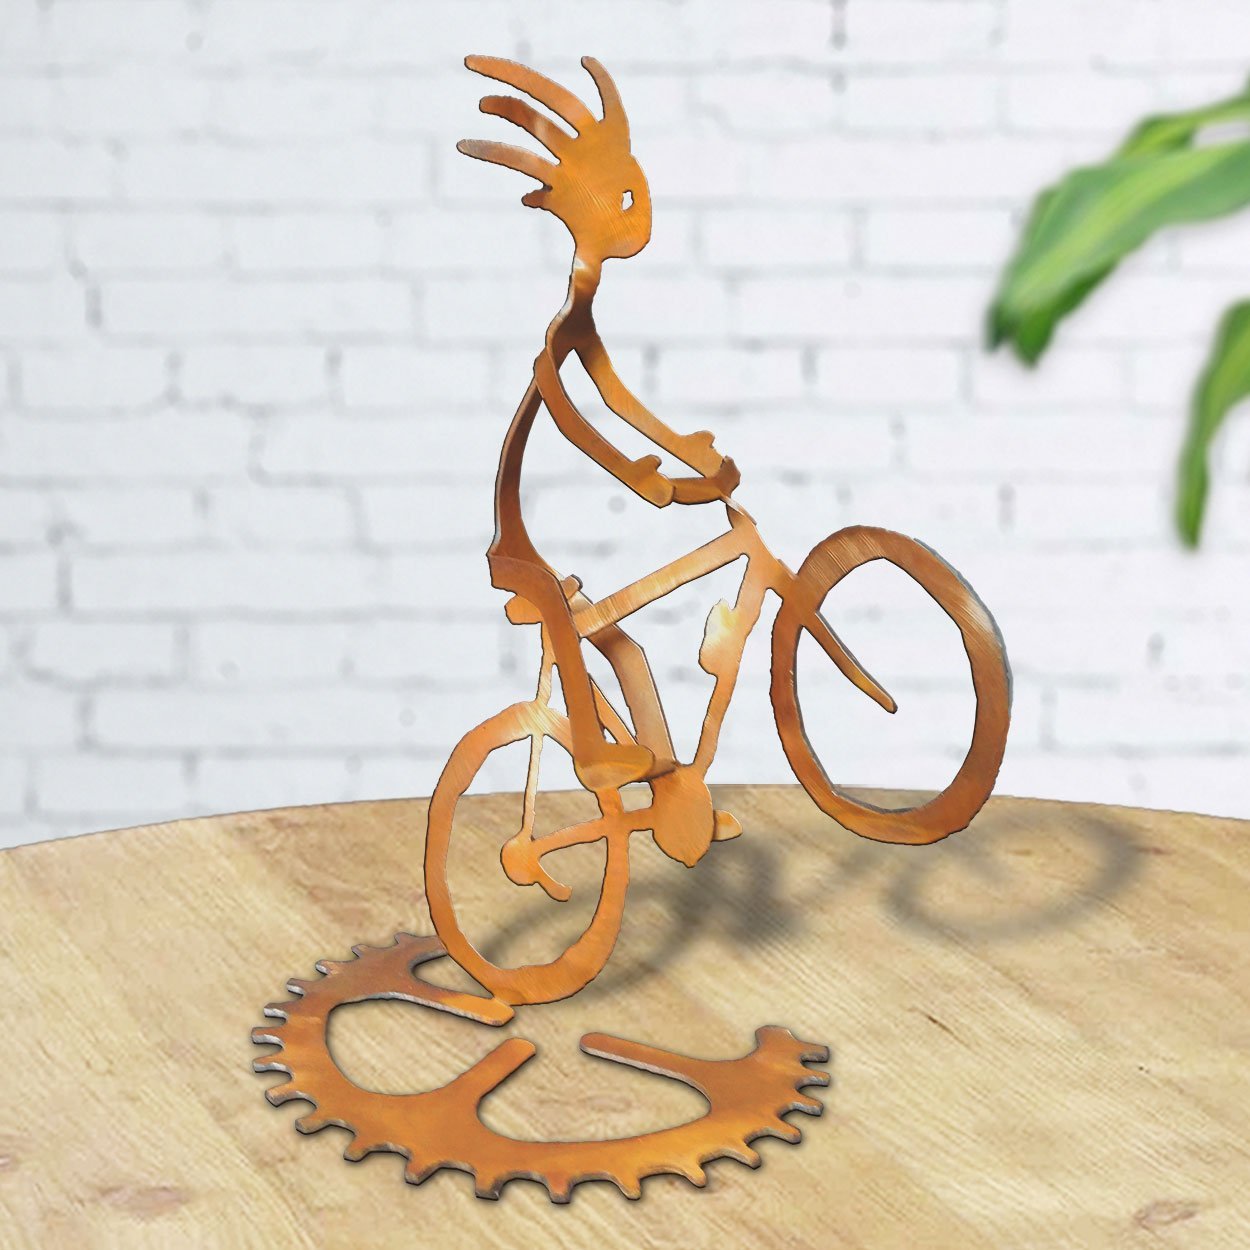 165805 - BS01RT09 10in Mr. Wheelie Male Kokopelli Cyclist Tabletop Sculpture